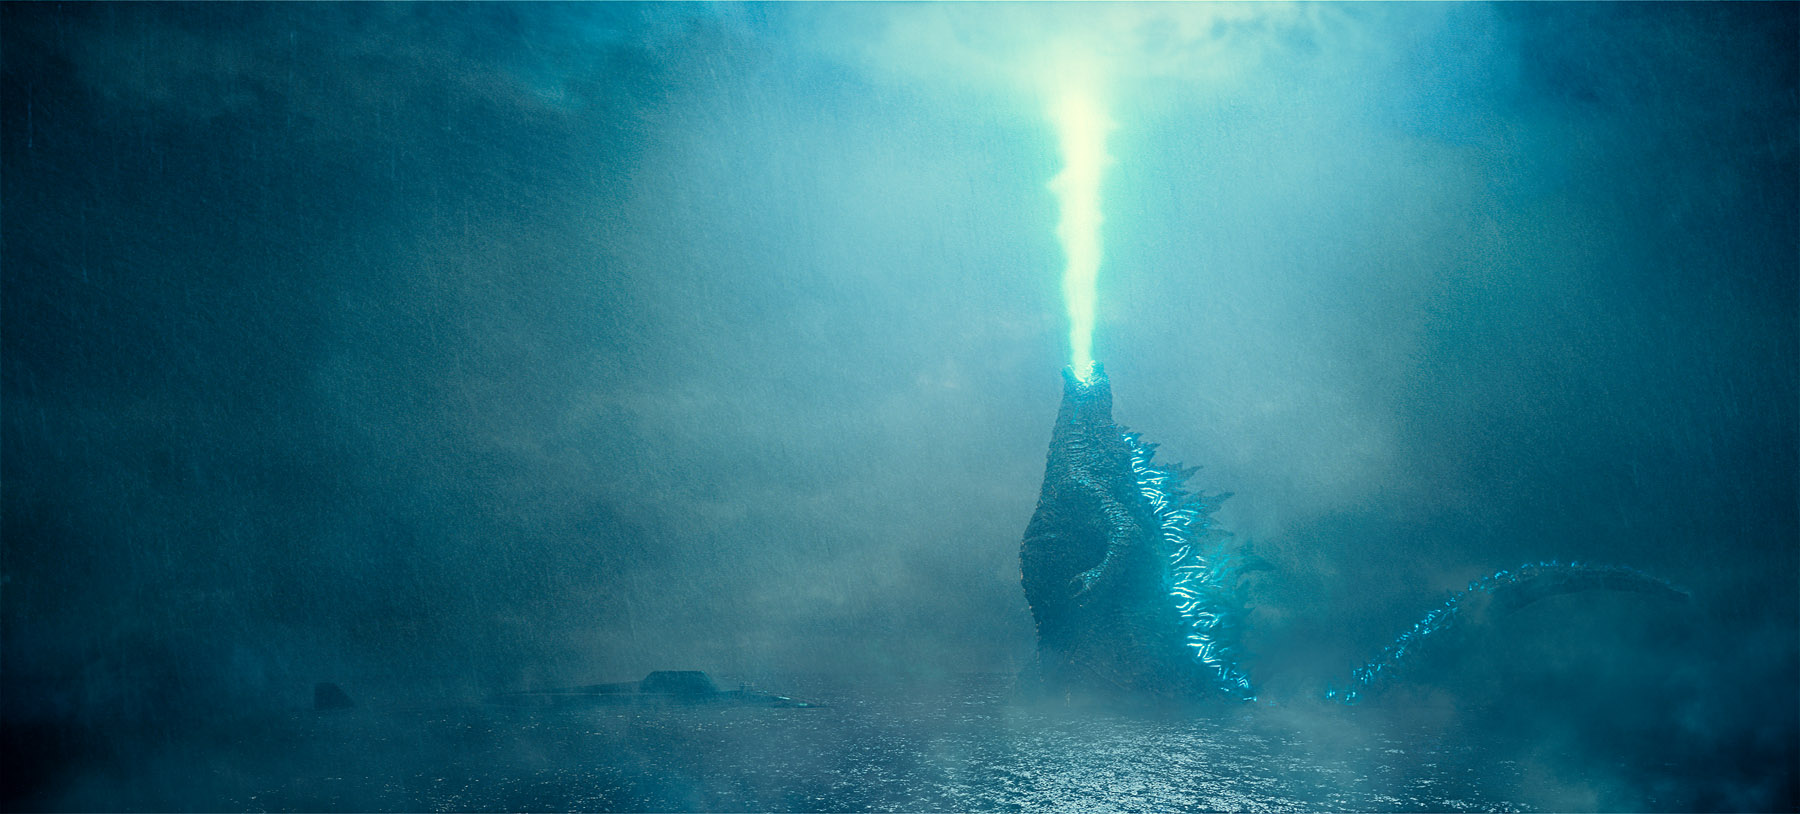 Godzilla On Track For $50M Opening